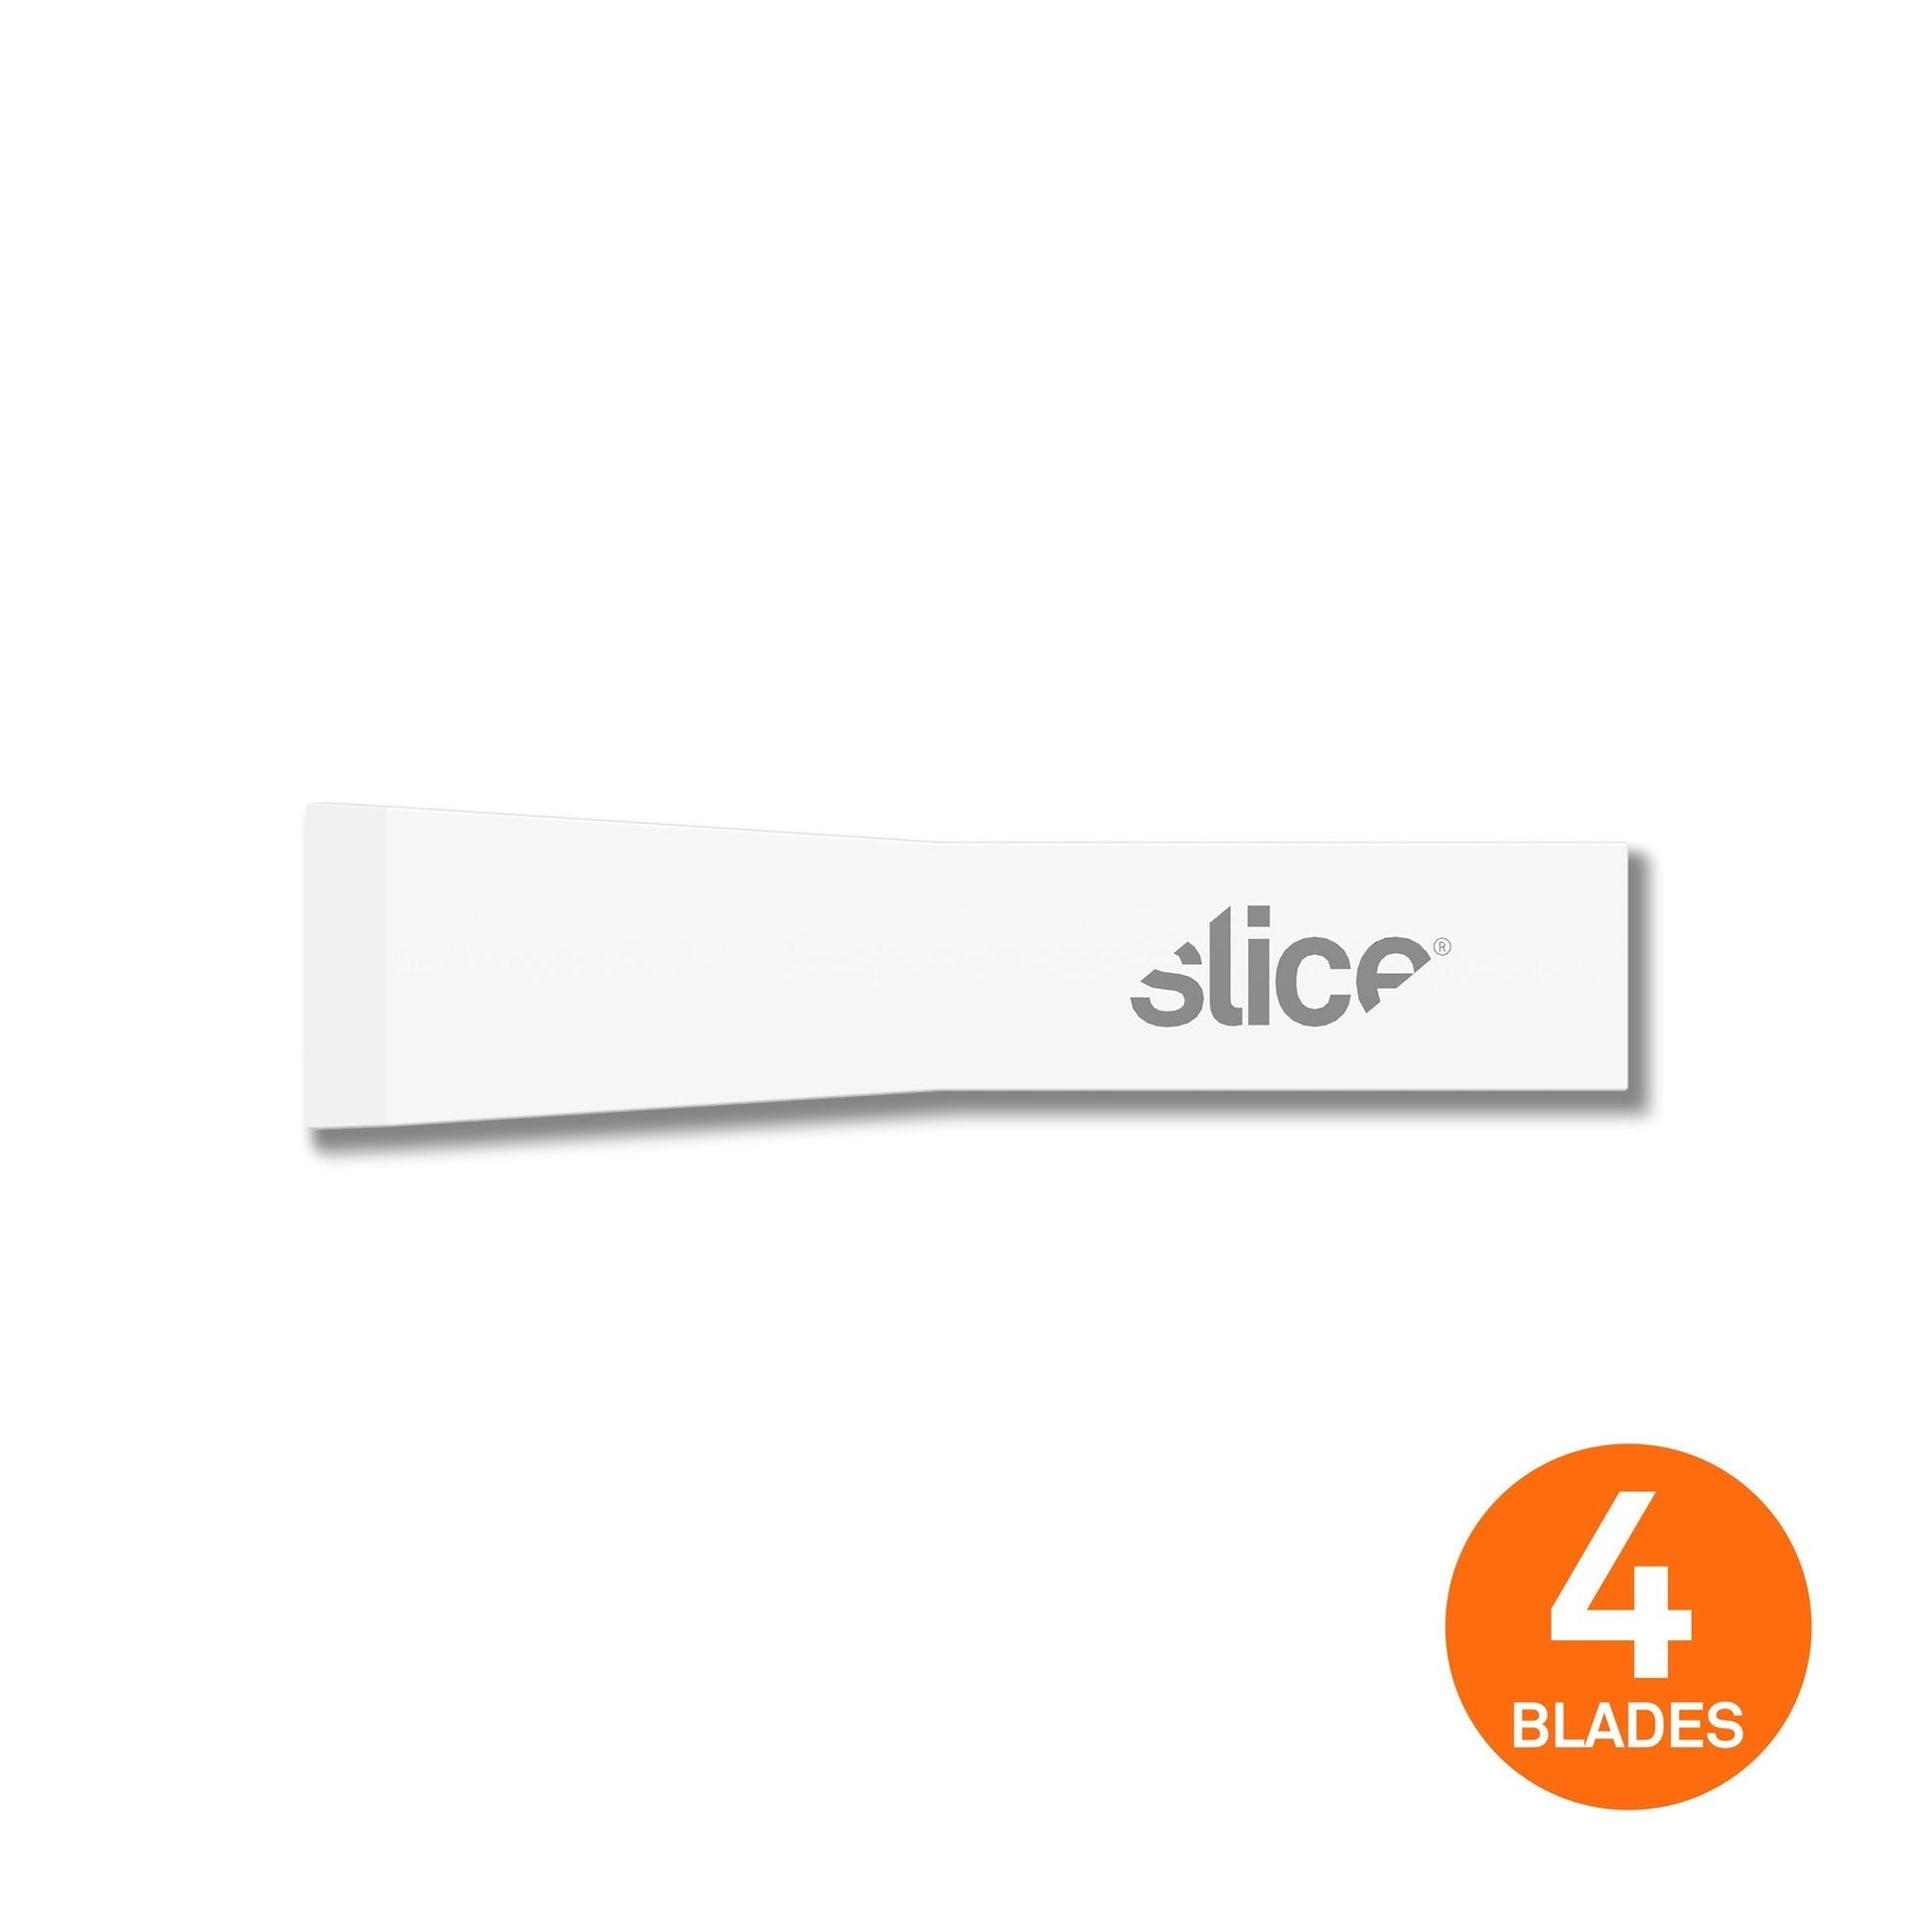 The Slice 10534 Chisel Blades